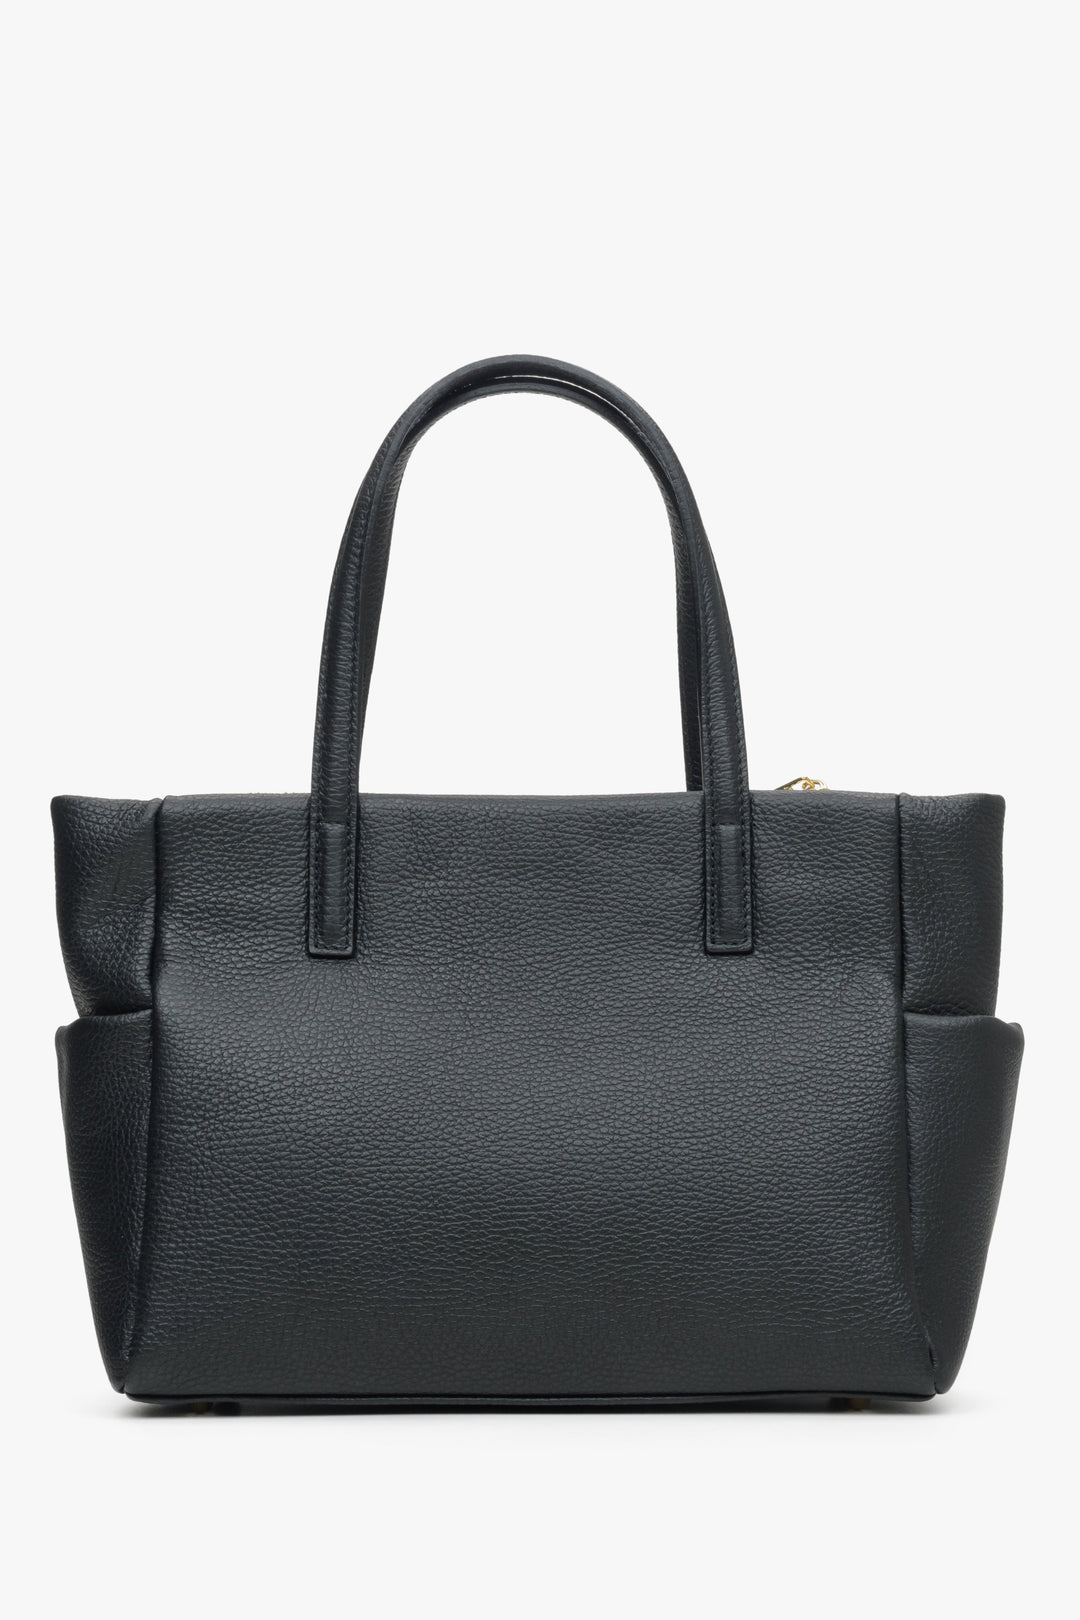 Women's black shopper bag by Estro.